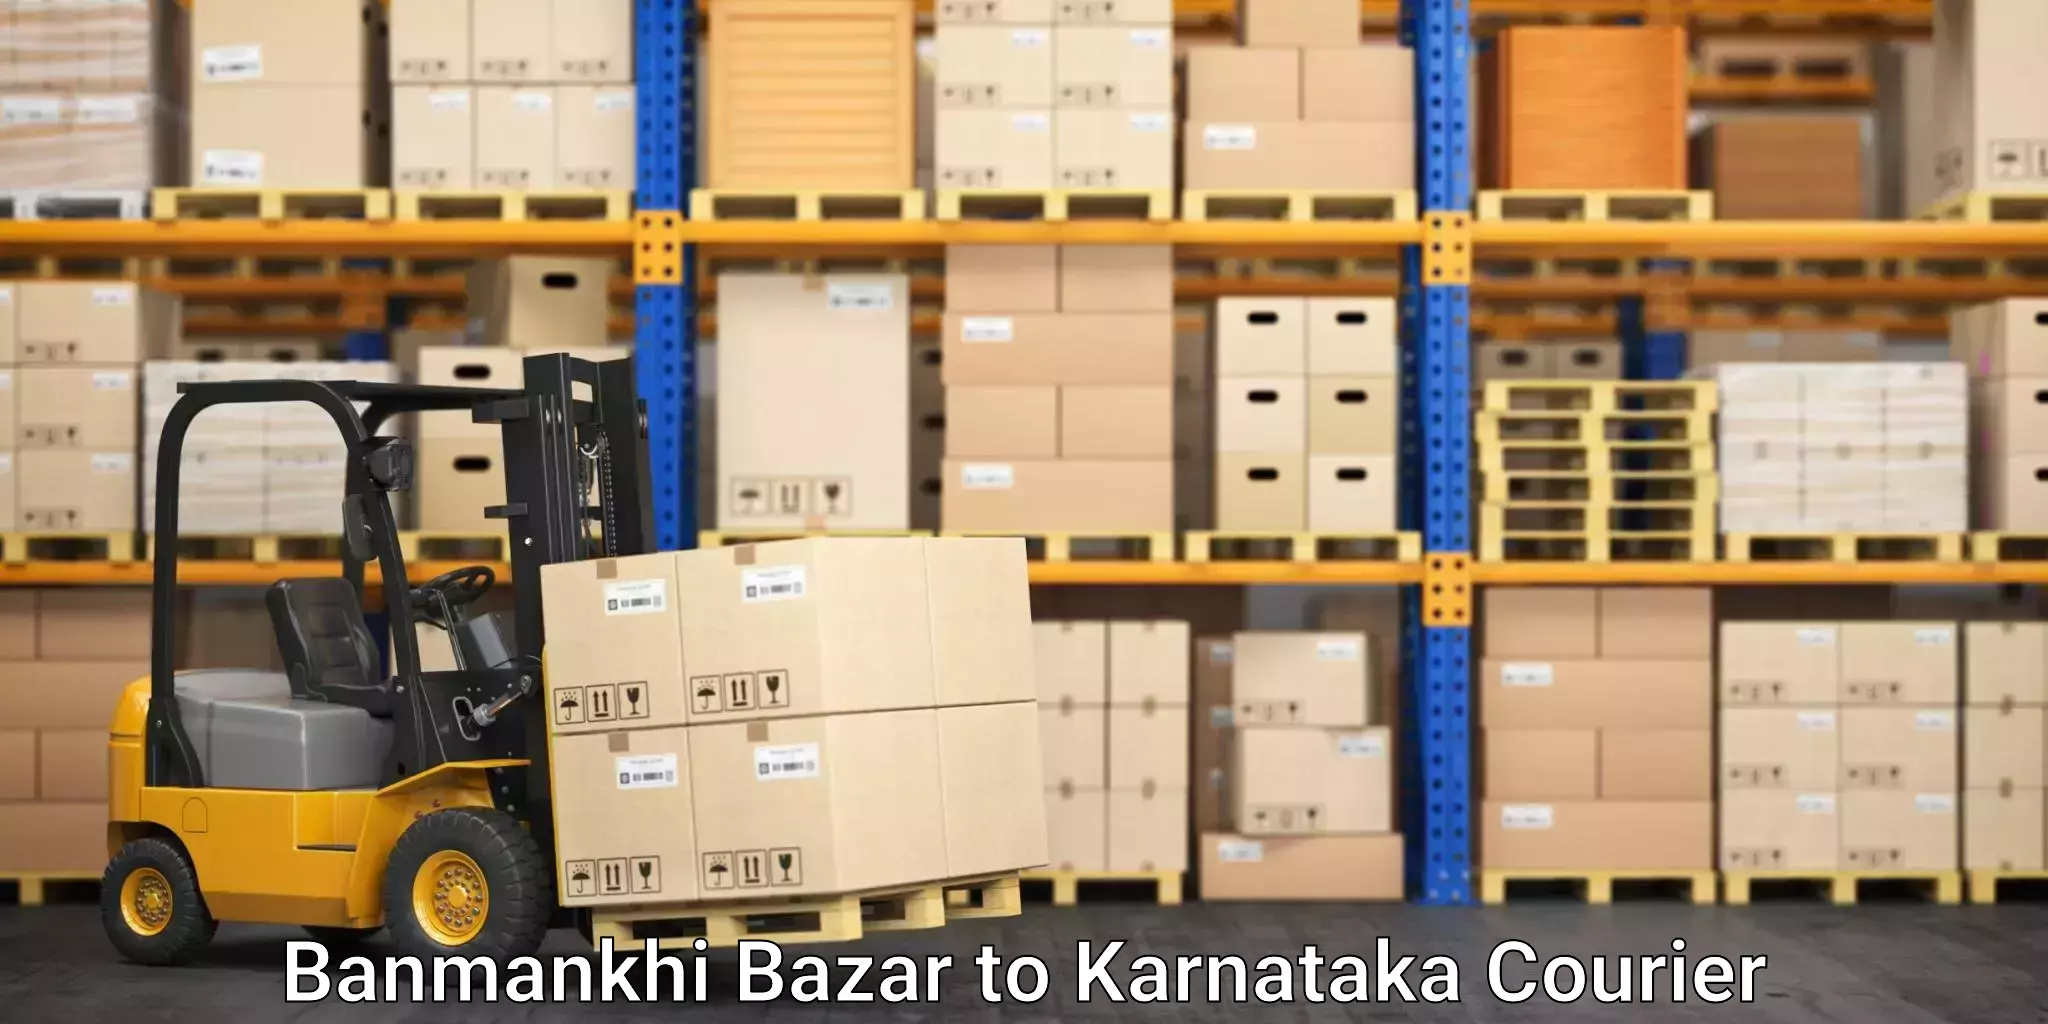 Quality moving company Banmankhi Bazar to Karnataka